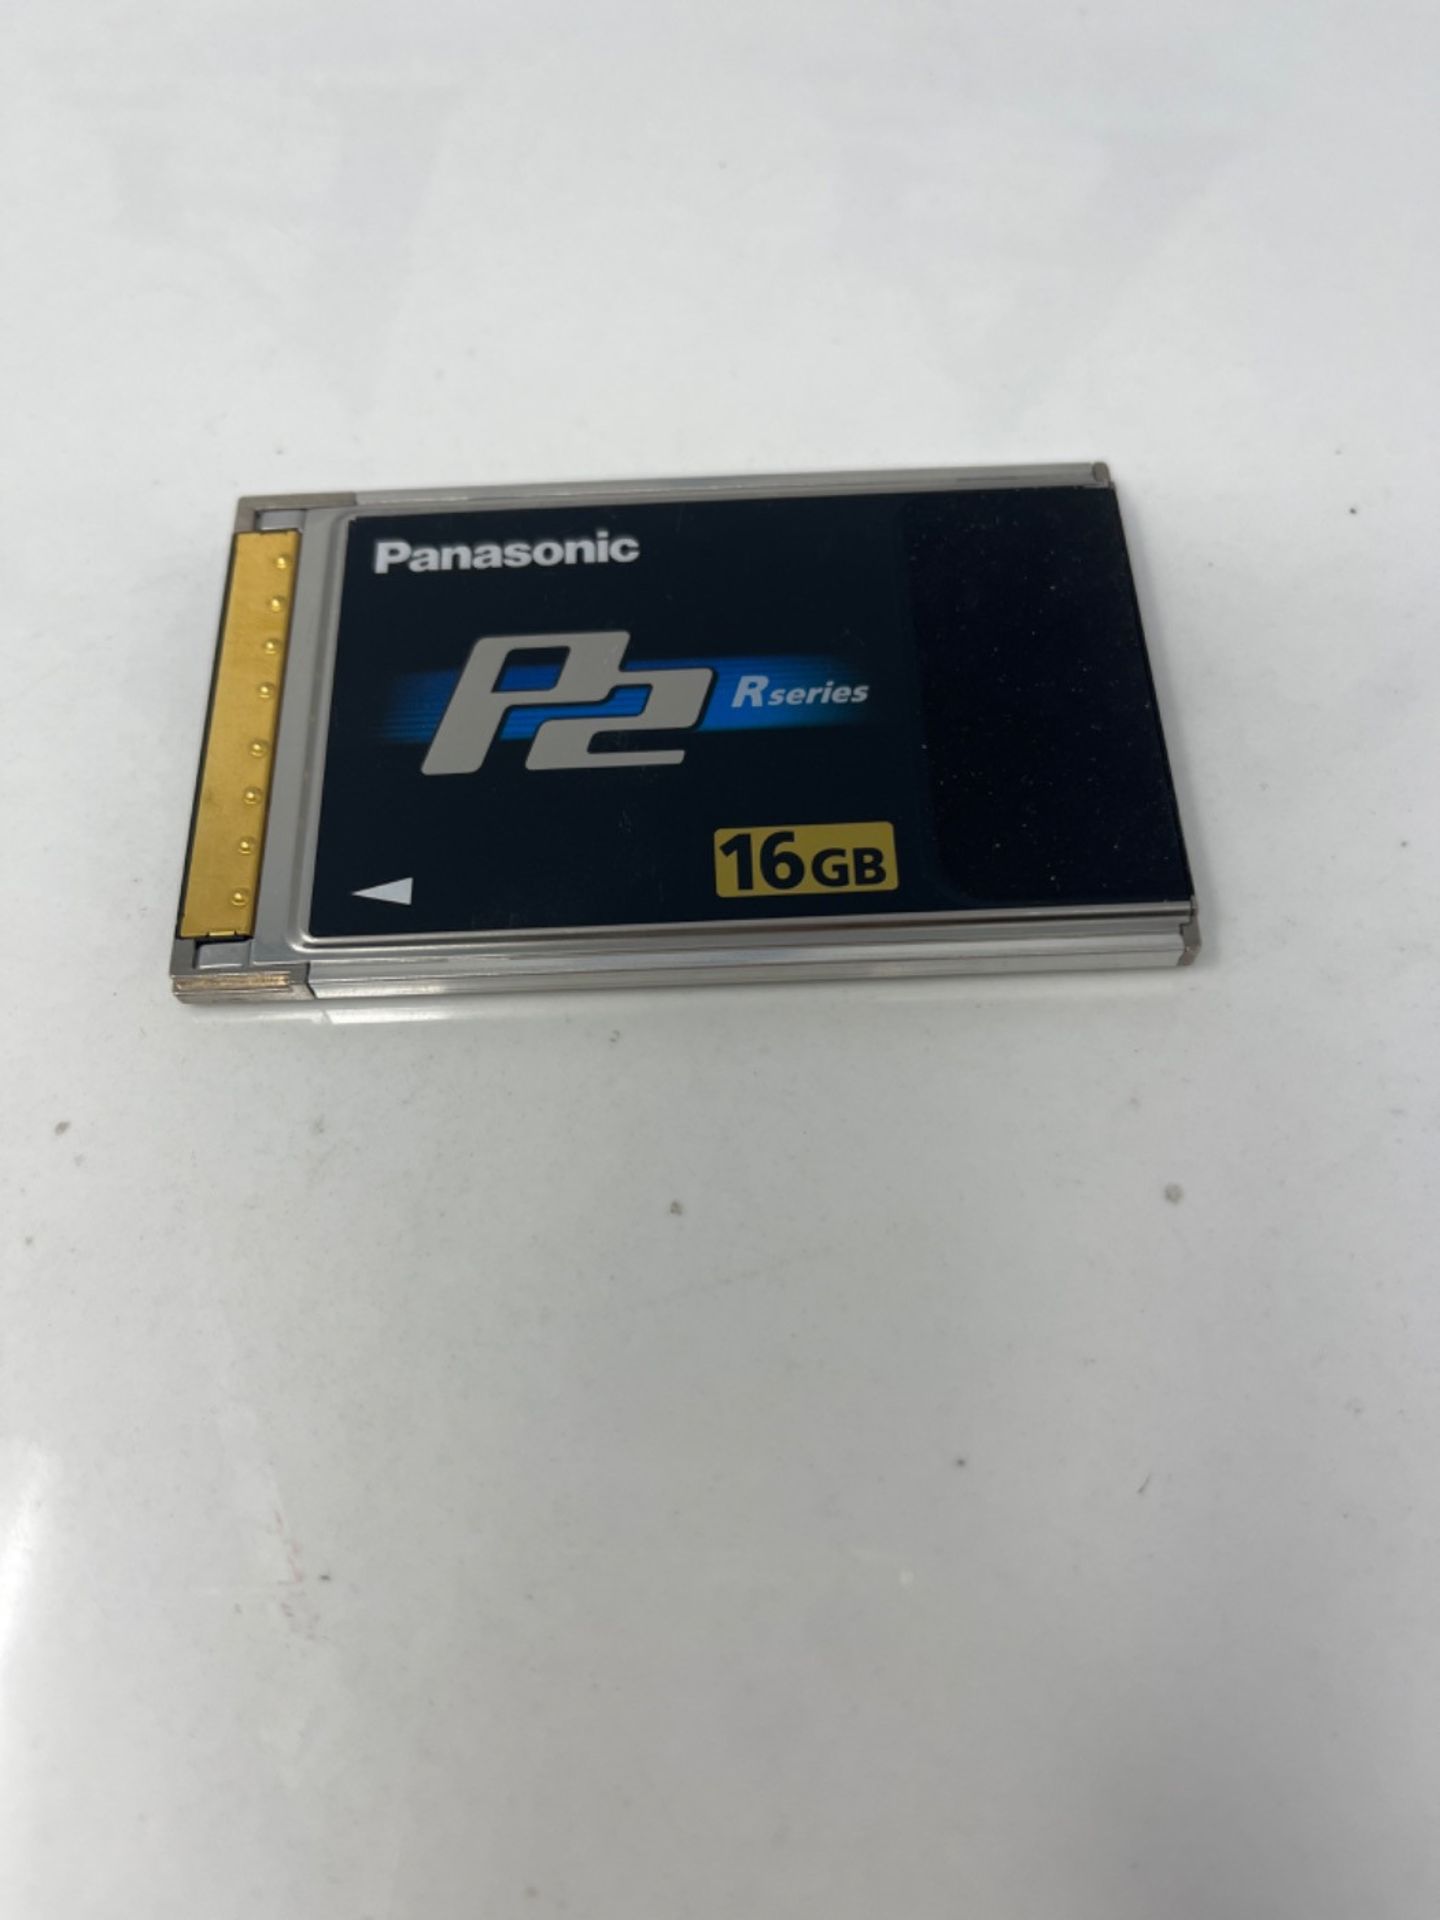 RRP £350.00 Panasonic P2 16GB RSeries card - Image 2 of 3